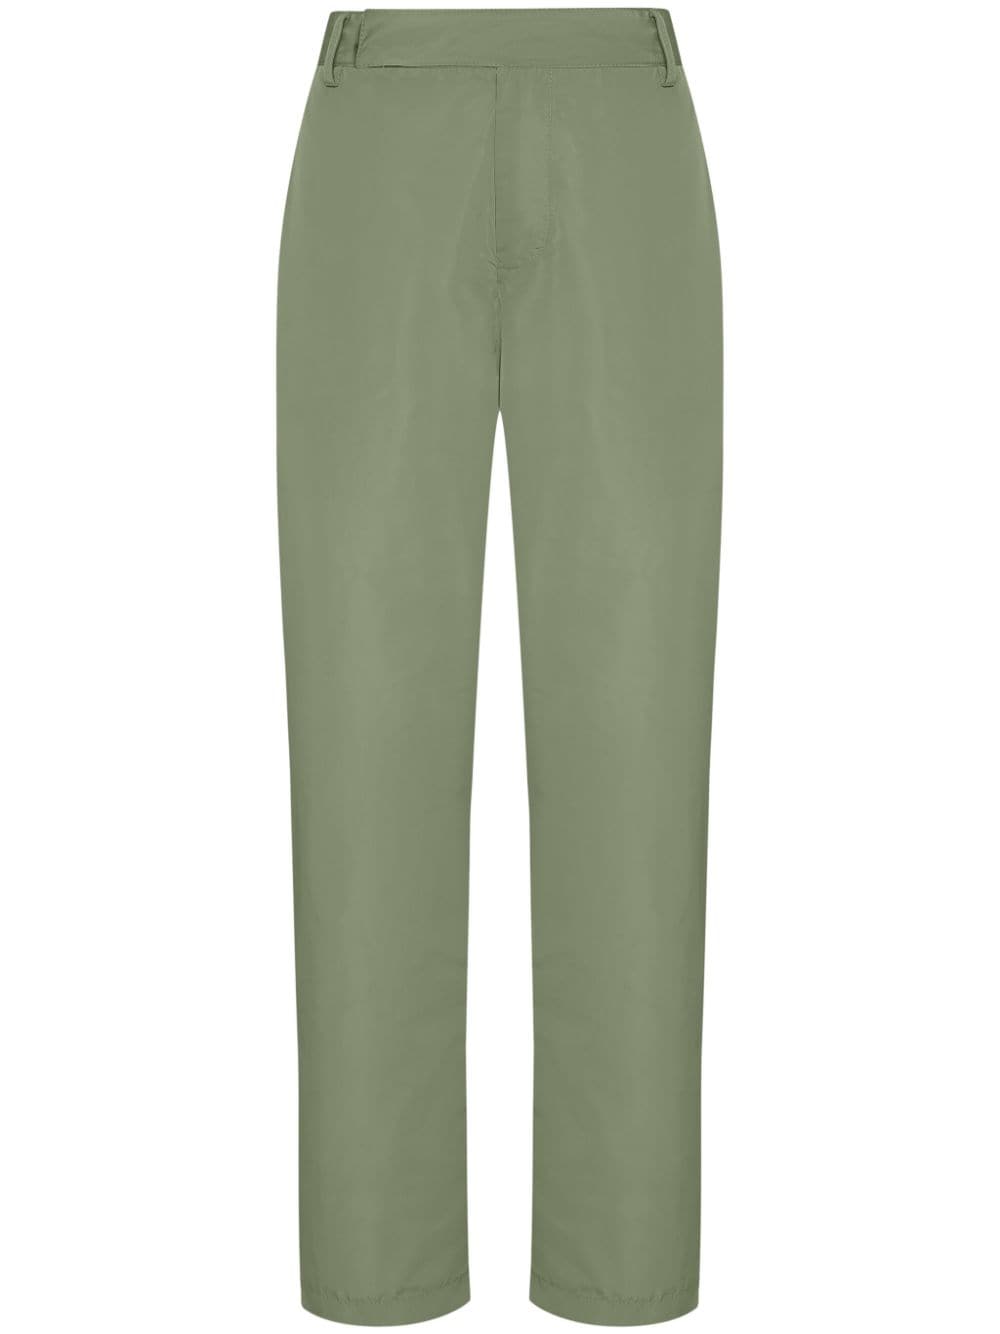 Uma | Raquel Davidowicz Solvente straight-leg tailored trousers - Green von Uma | Raquel Davidowicz